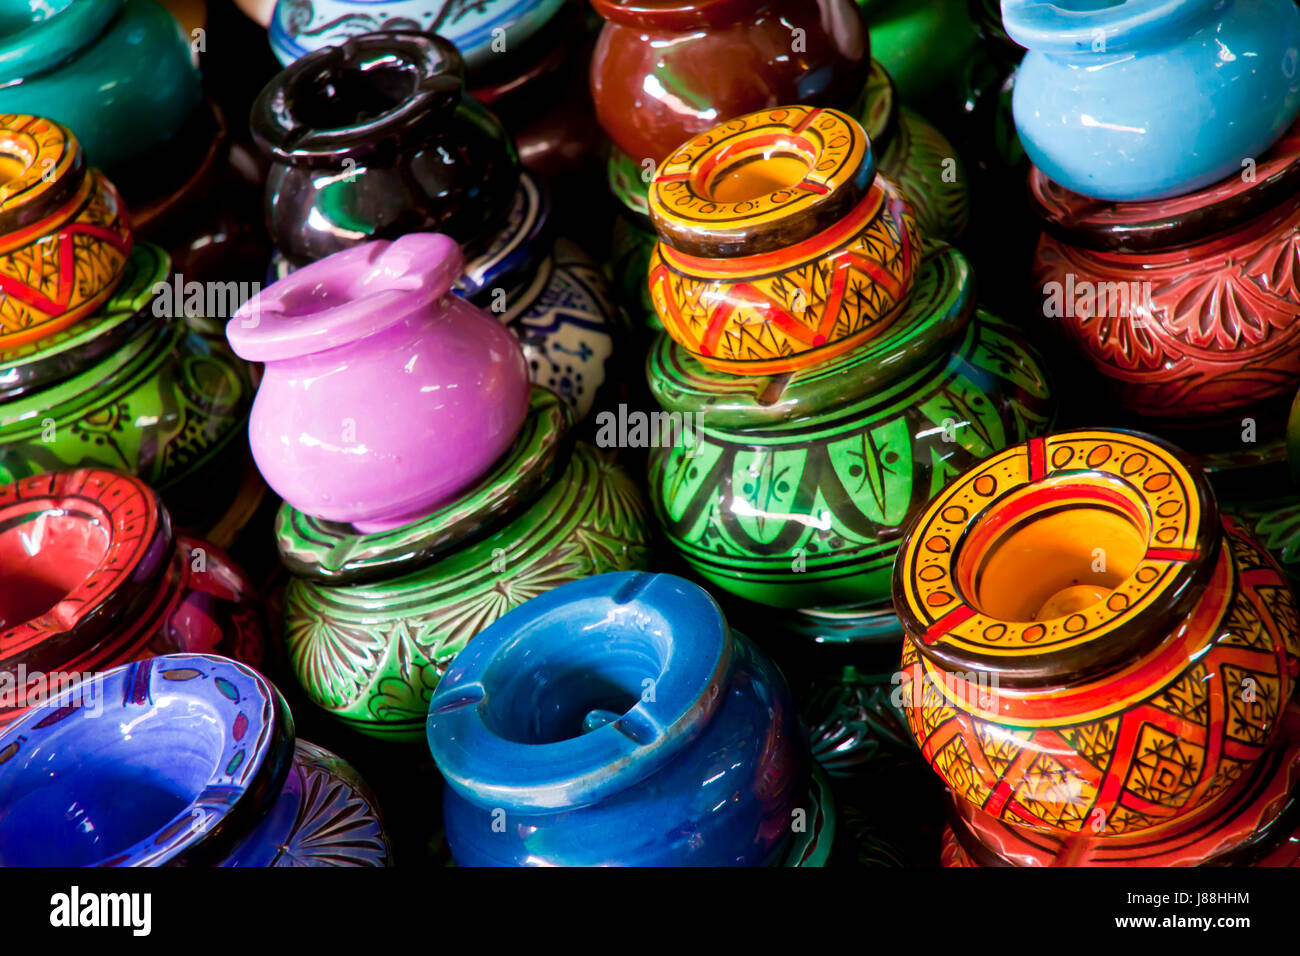 Aschenbecher, Marokko, Keramik, Muster, Souvenir, handgefertigt, bunt, Haus  Stockfotografie - Alamy